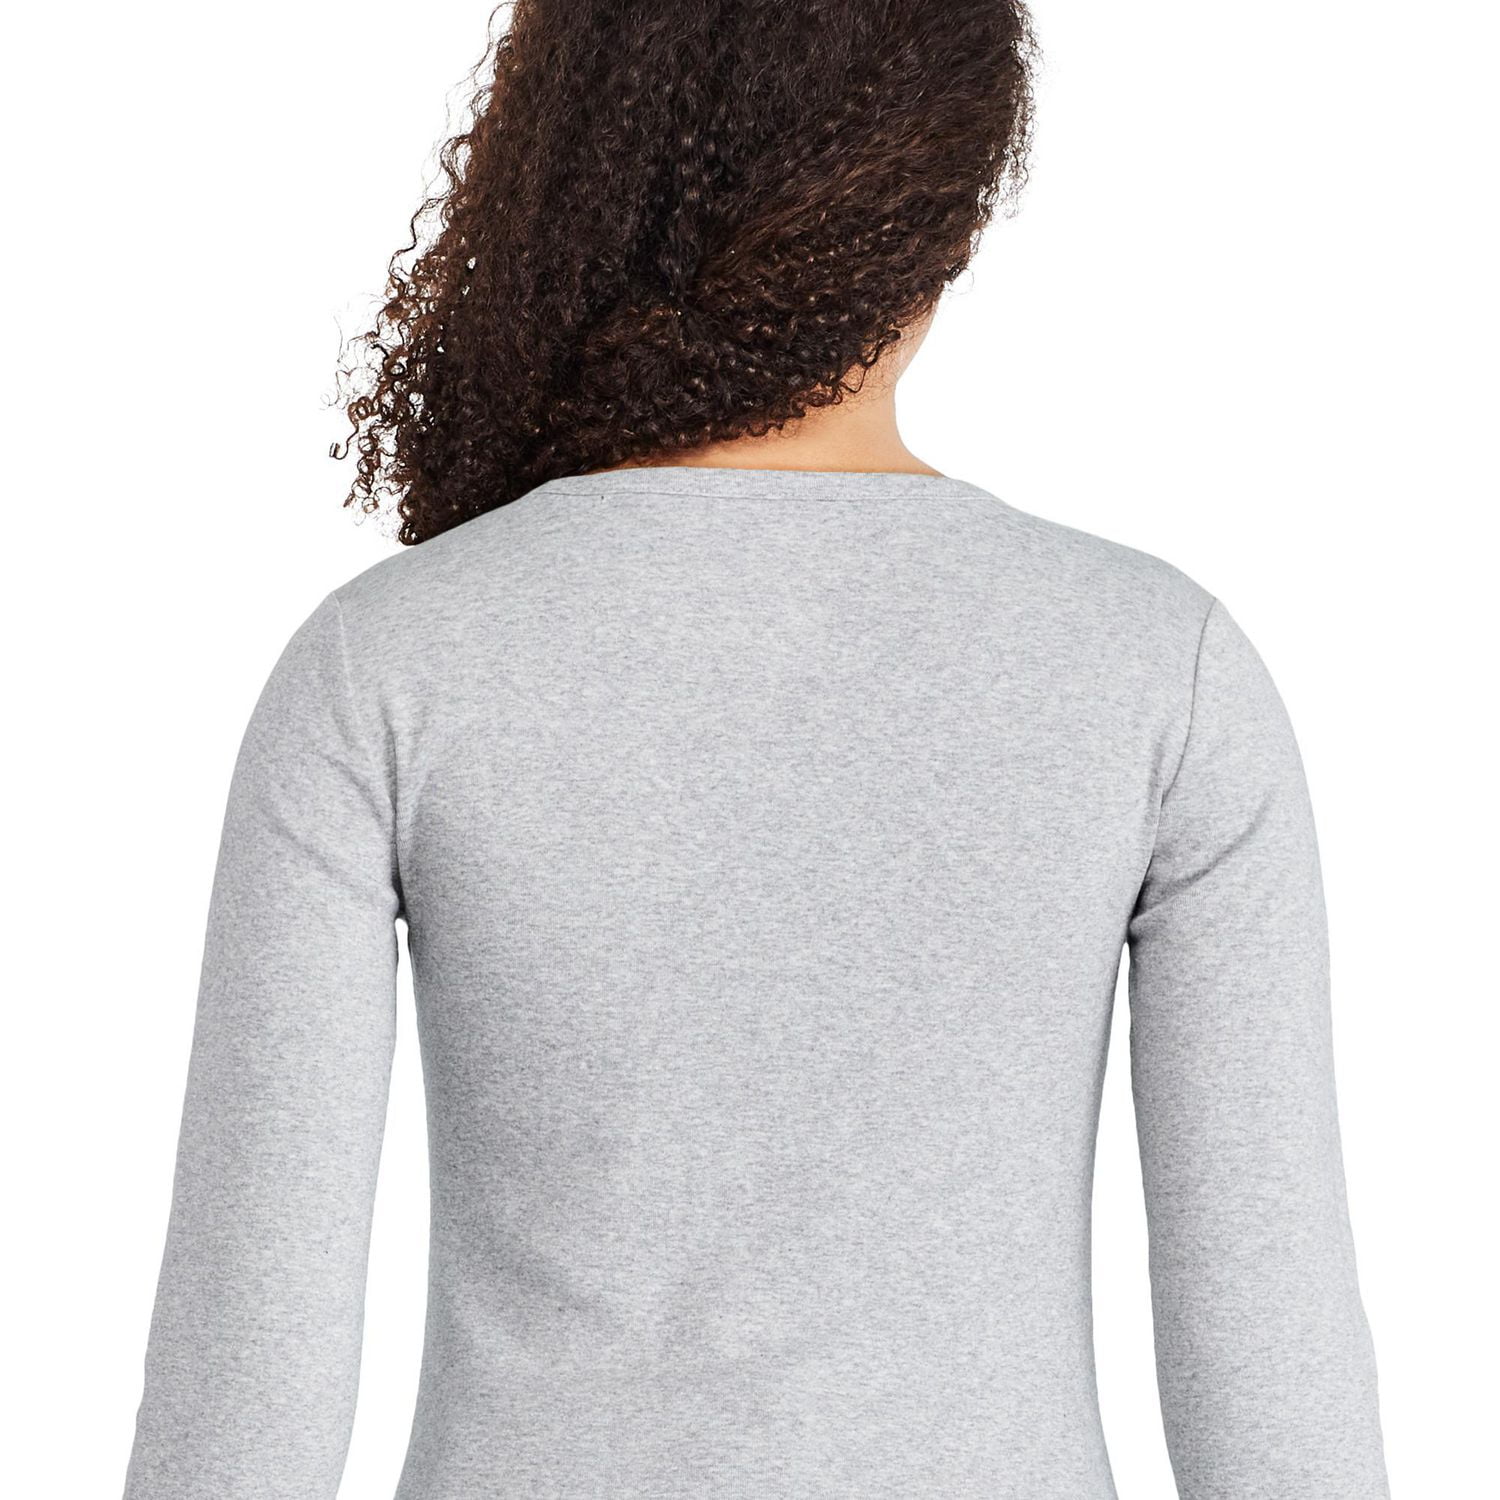  Ekouaer Tight Long Sleeve Shirt for Women Grey Slim